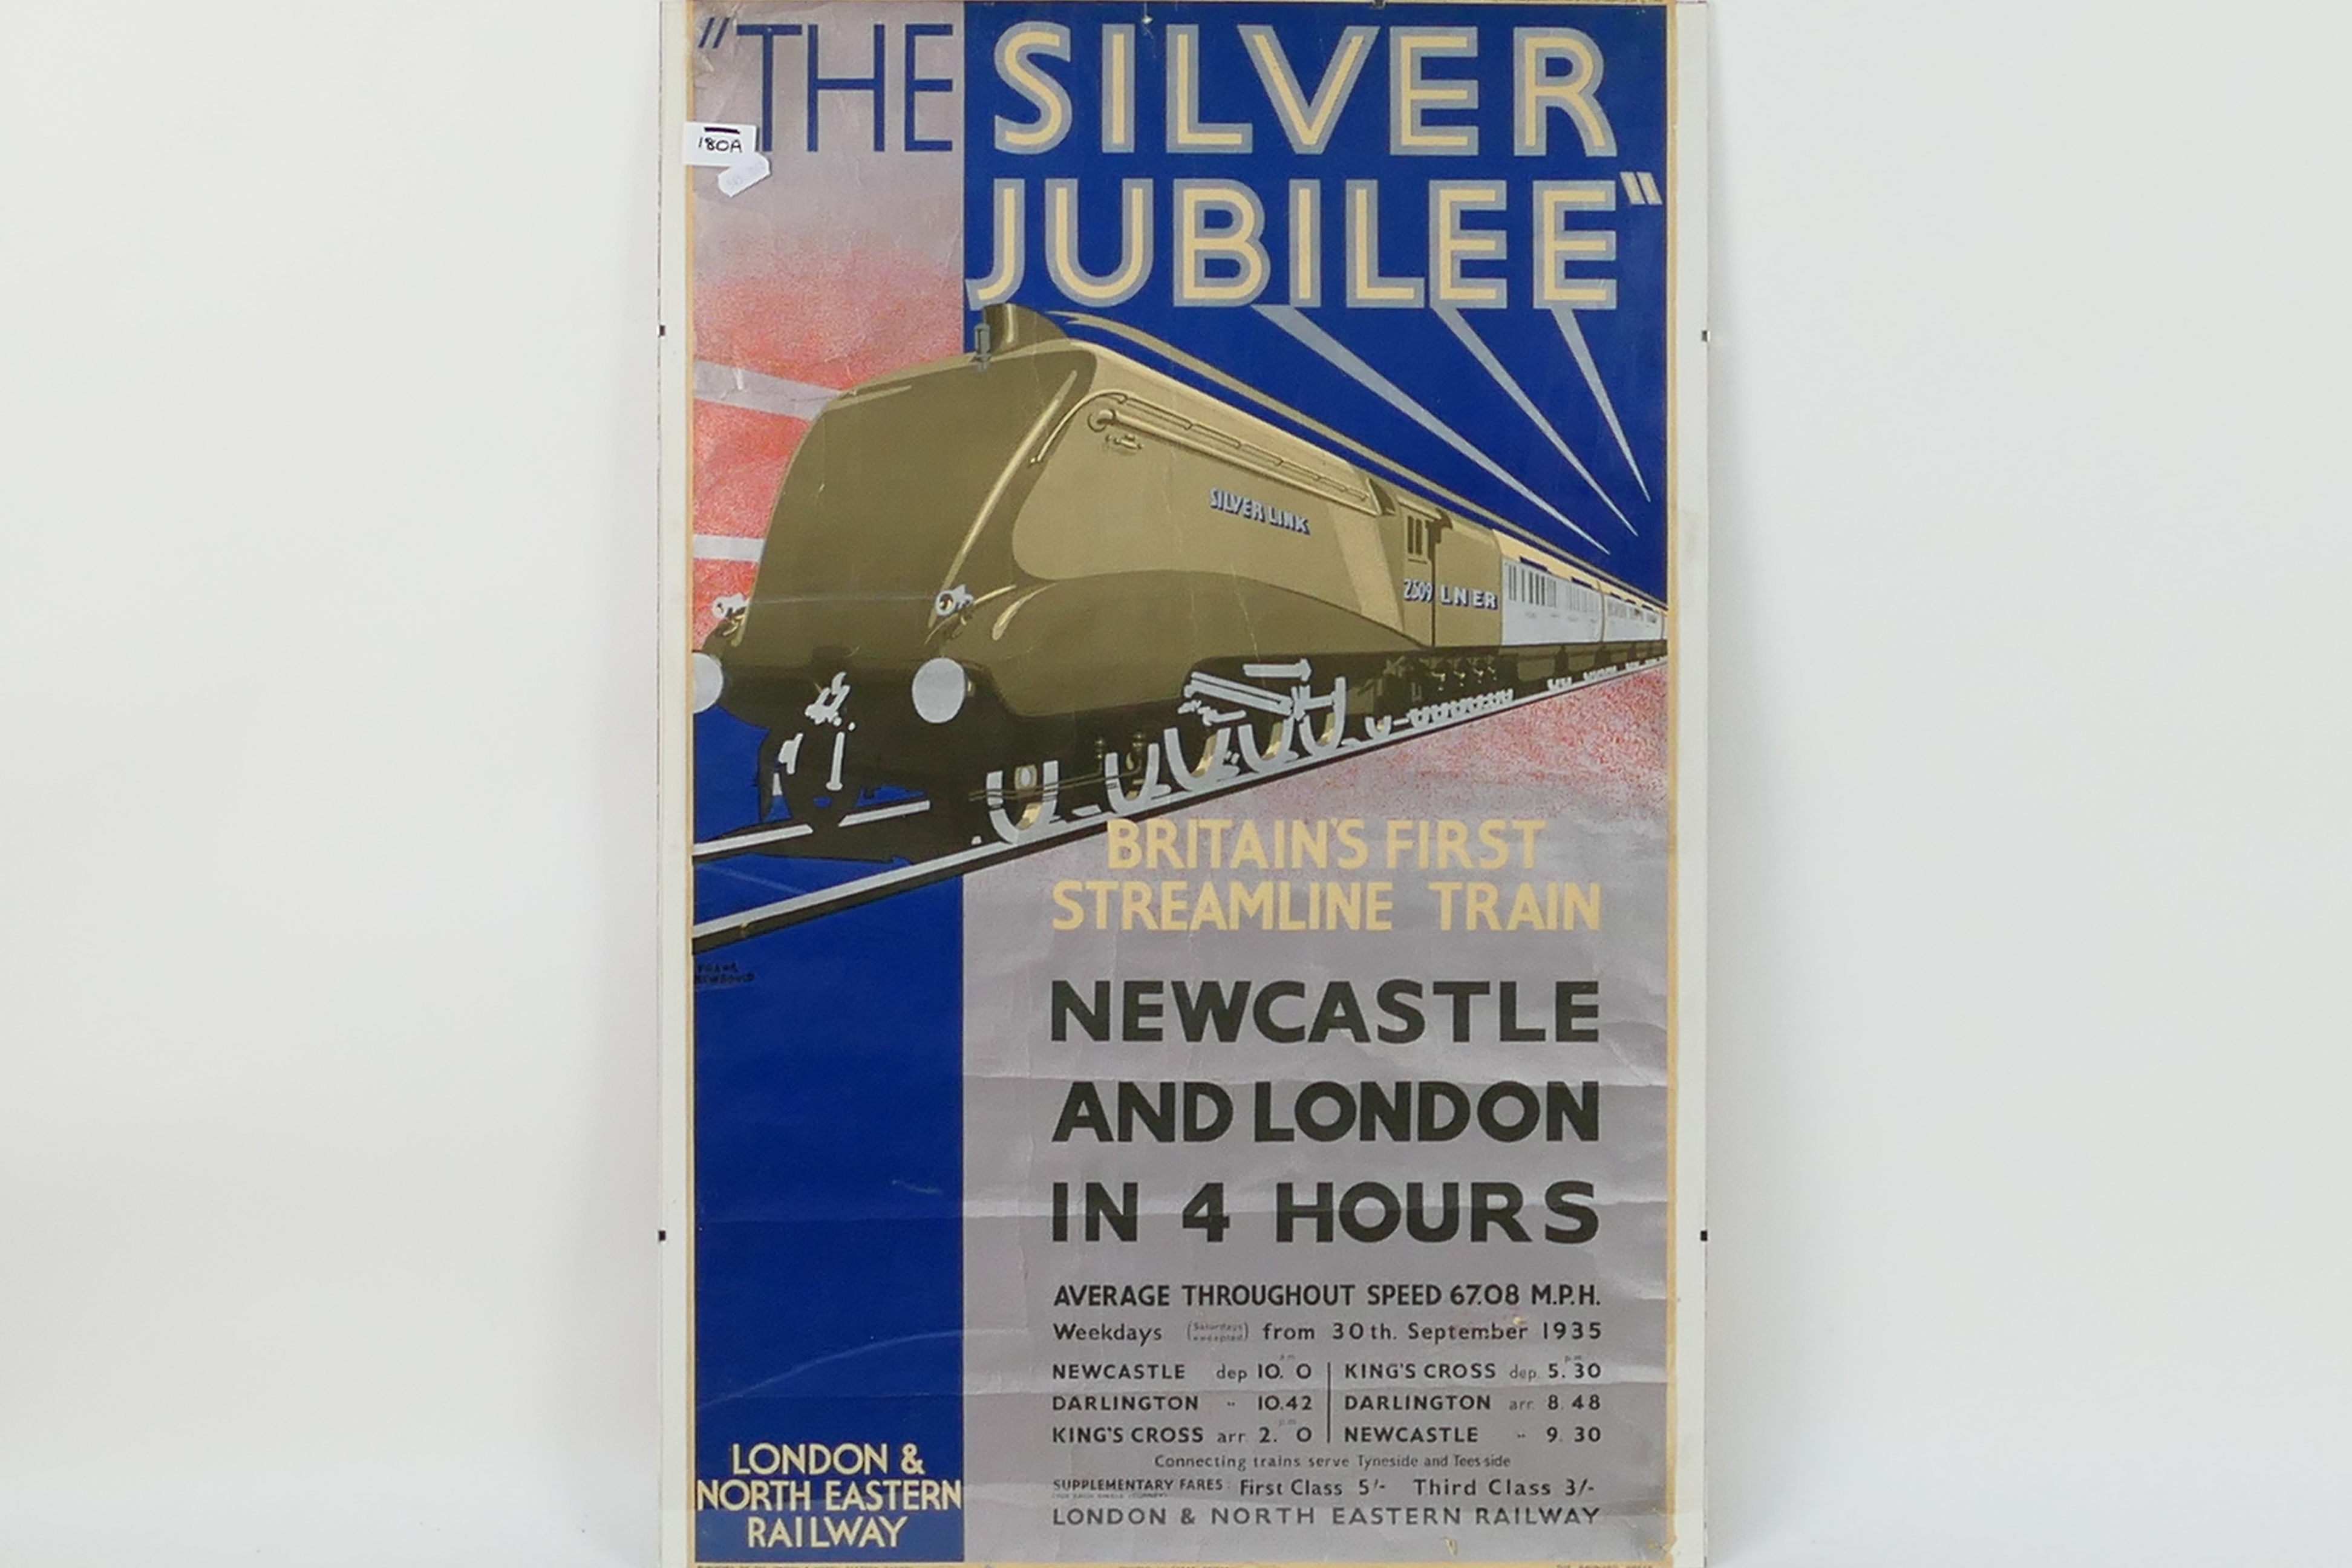 A Frank Newbould designed railway poster